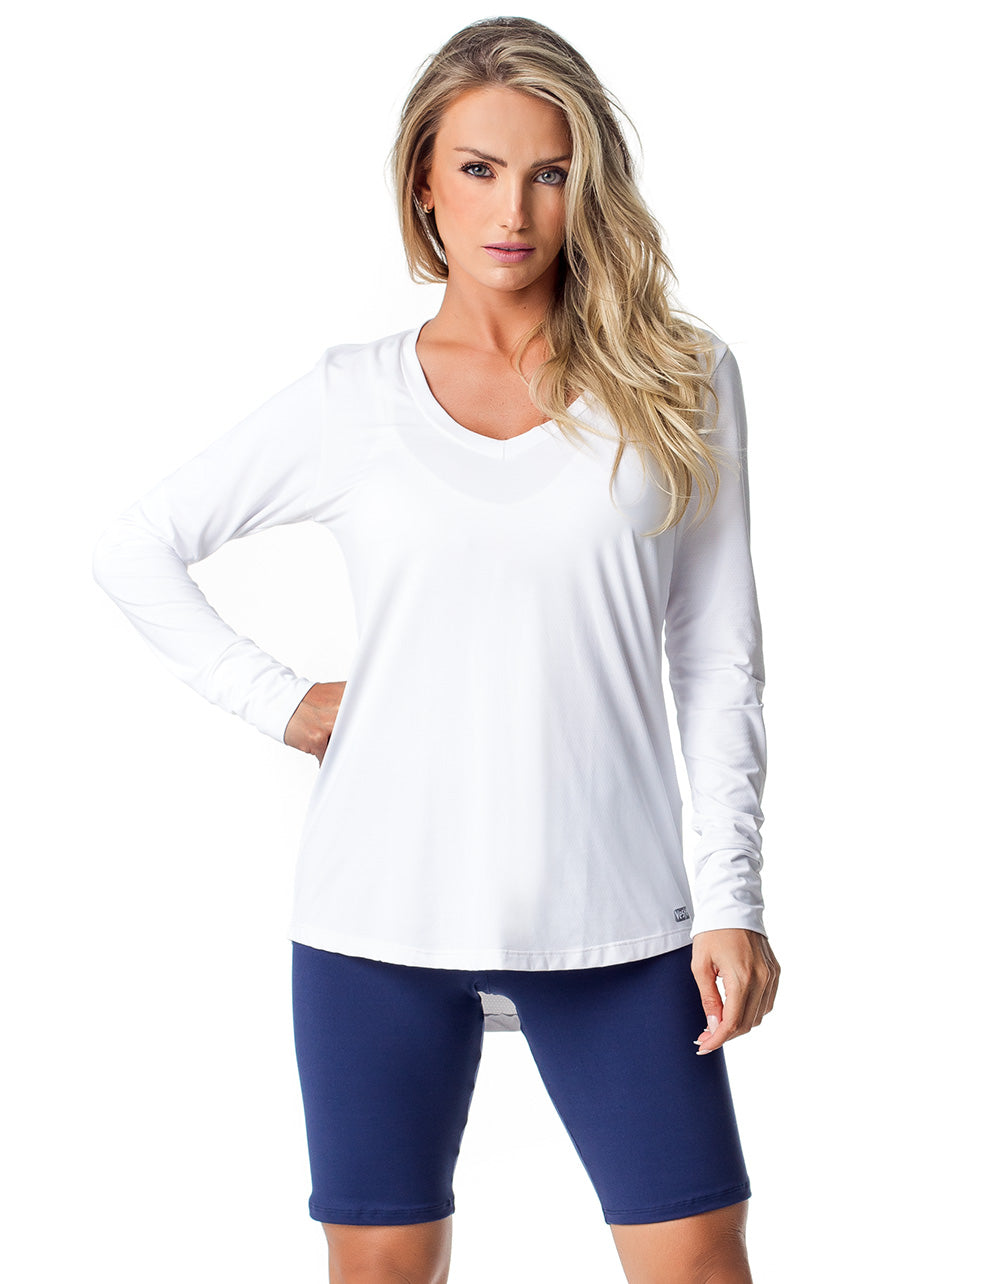 Vestem - Dry Fit Long Sleeve Shirt Janice White - BML16C0001